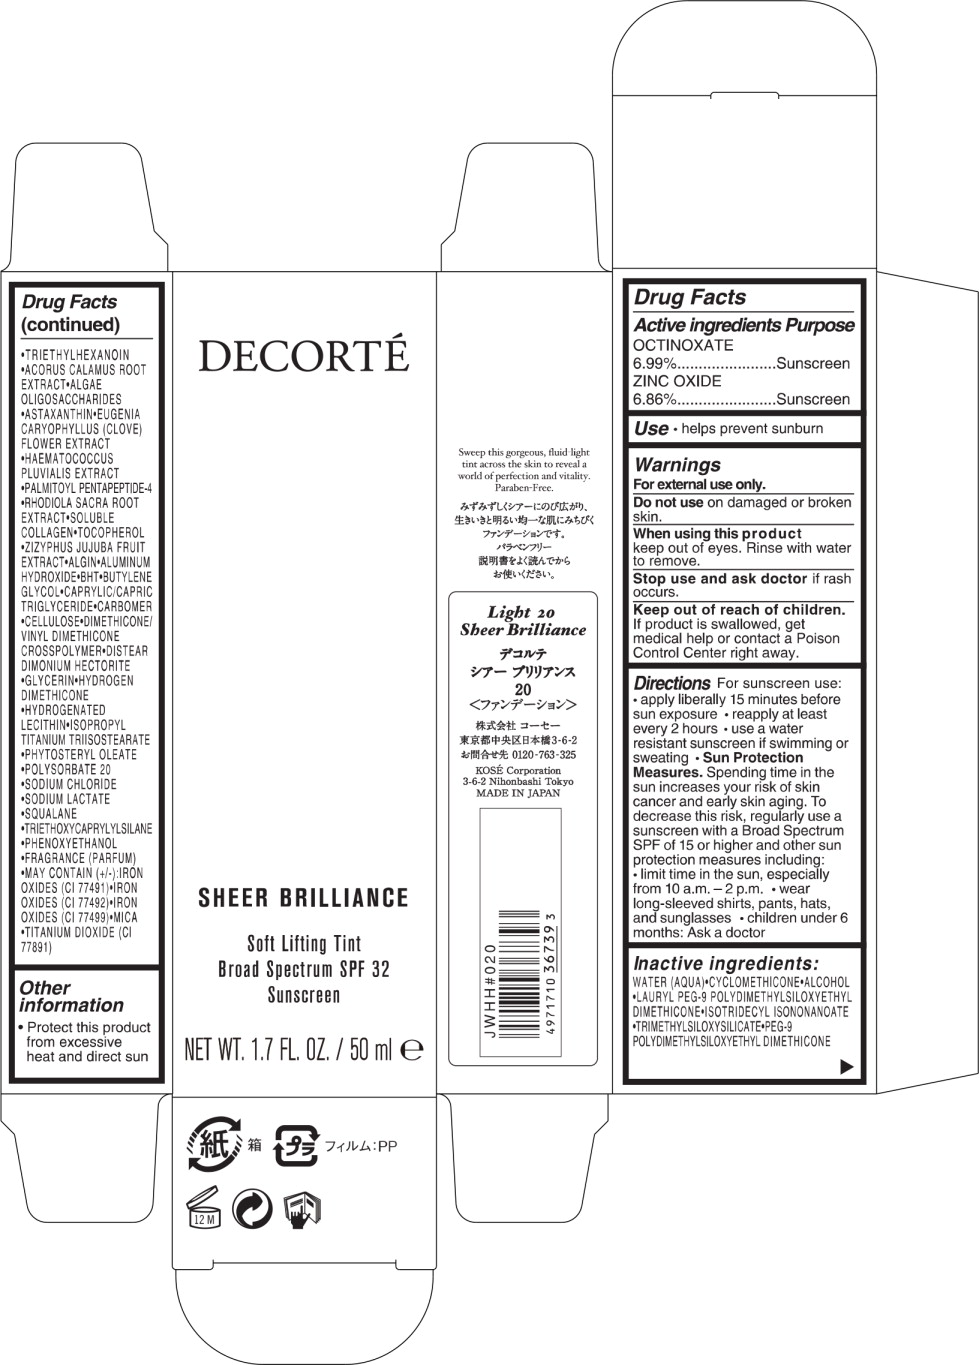 Principal Display Panel - Decorte Sheet Brilliance 20 Level 50 ml Carton Label
